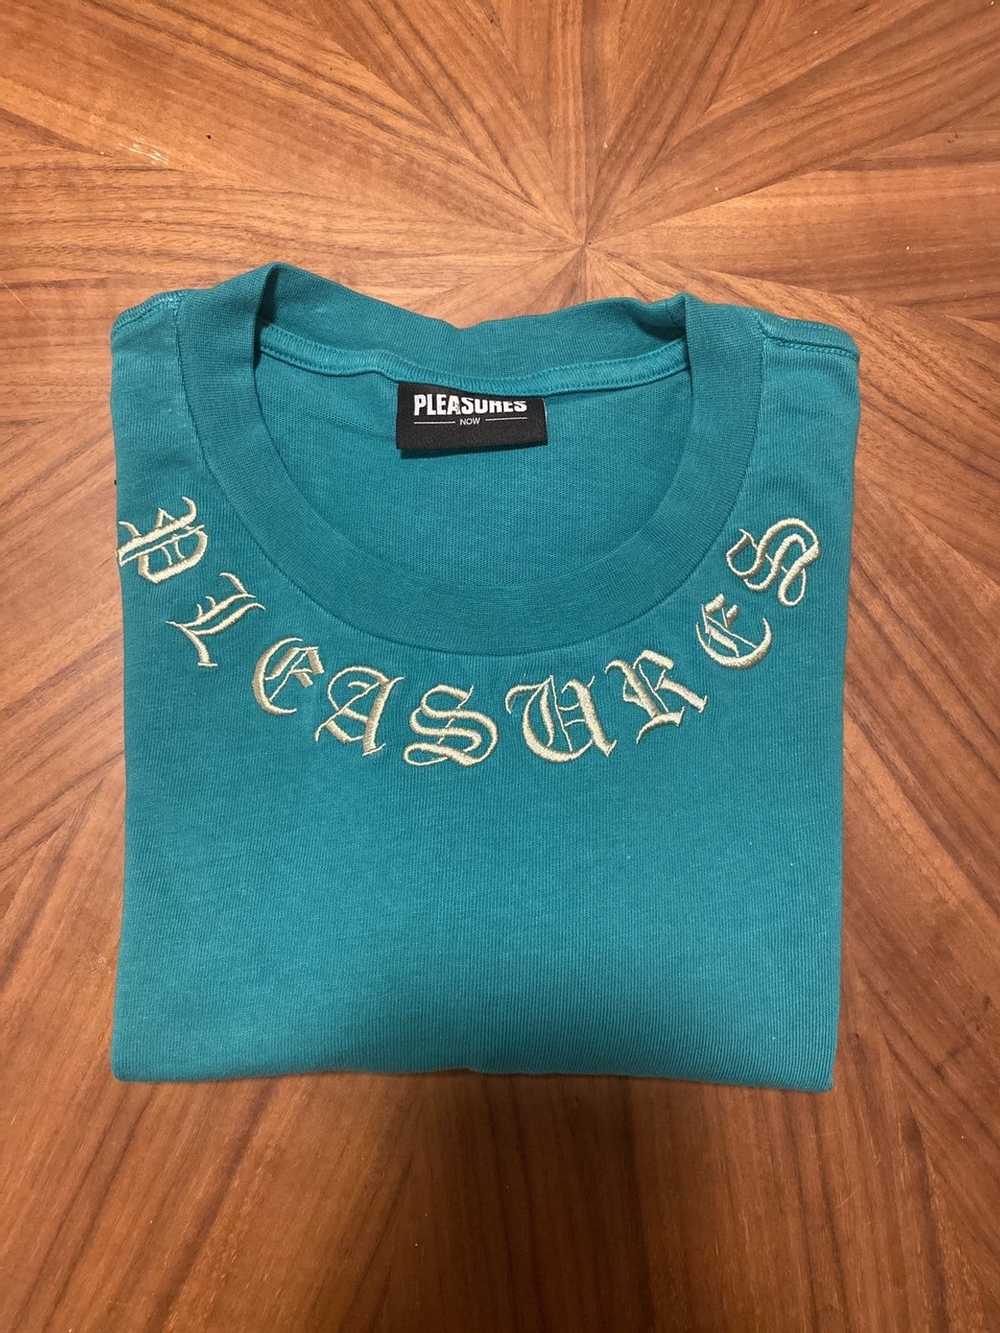 Pleasures Pleasures Memento heavyweight T-shirt - image 4